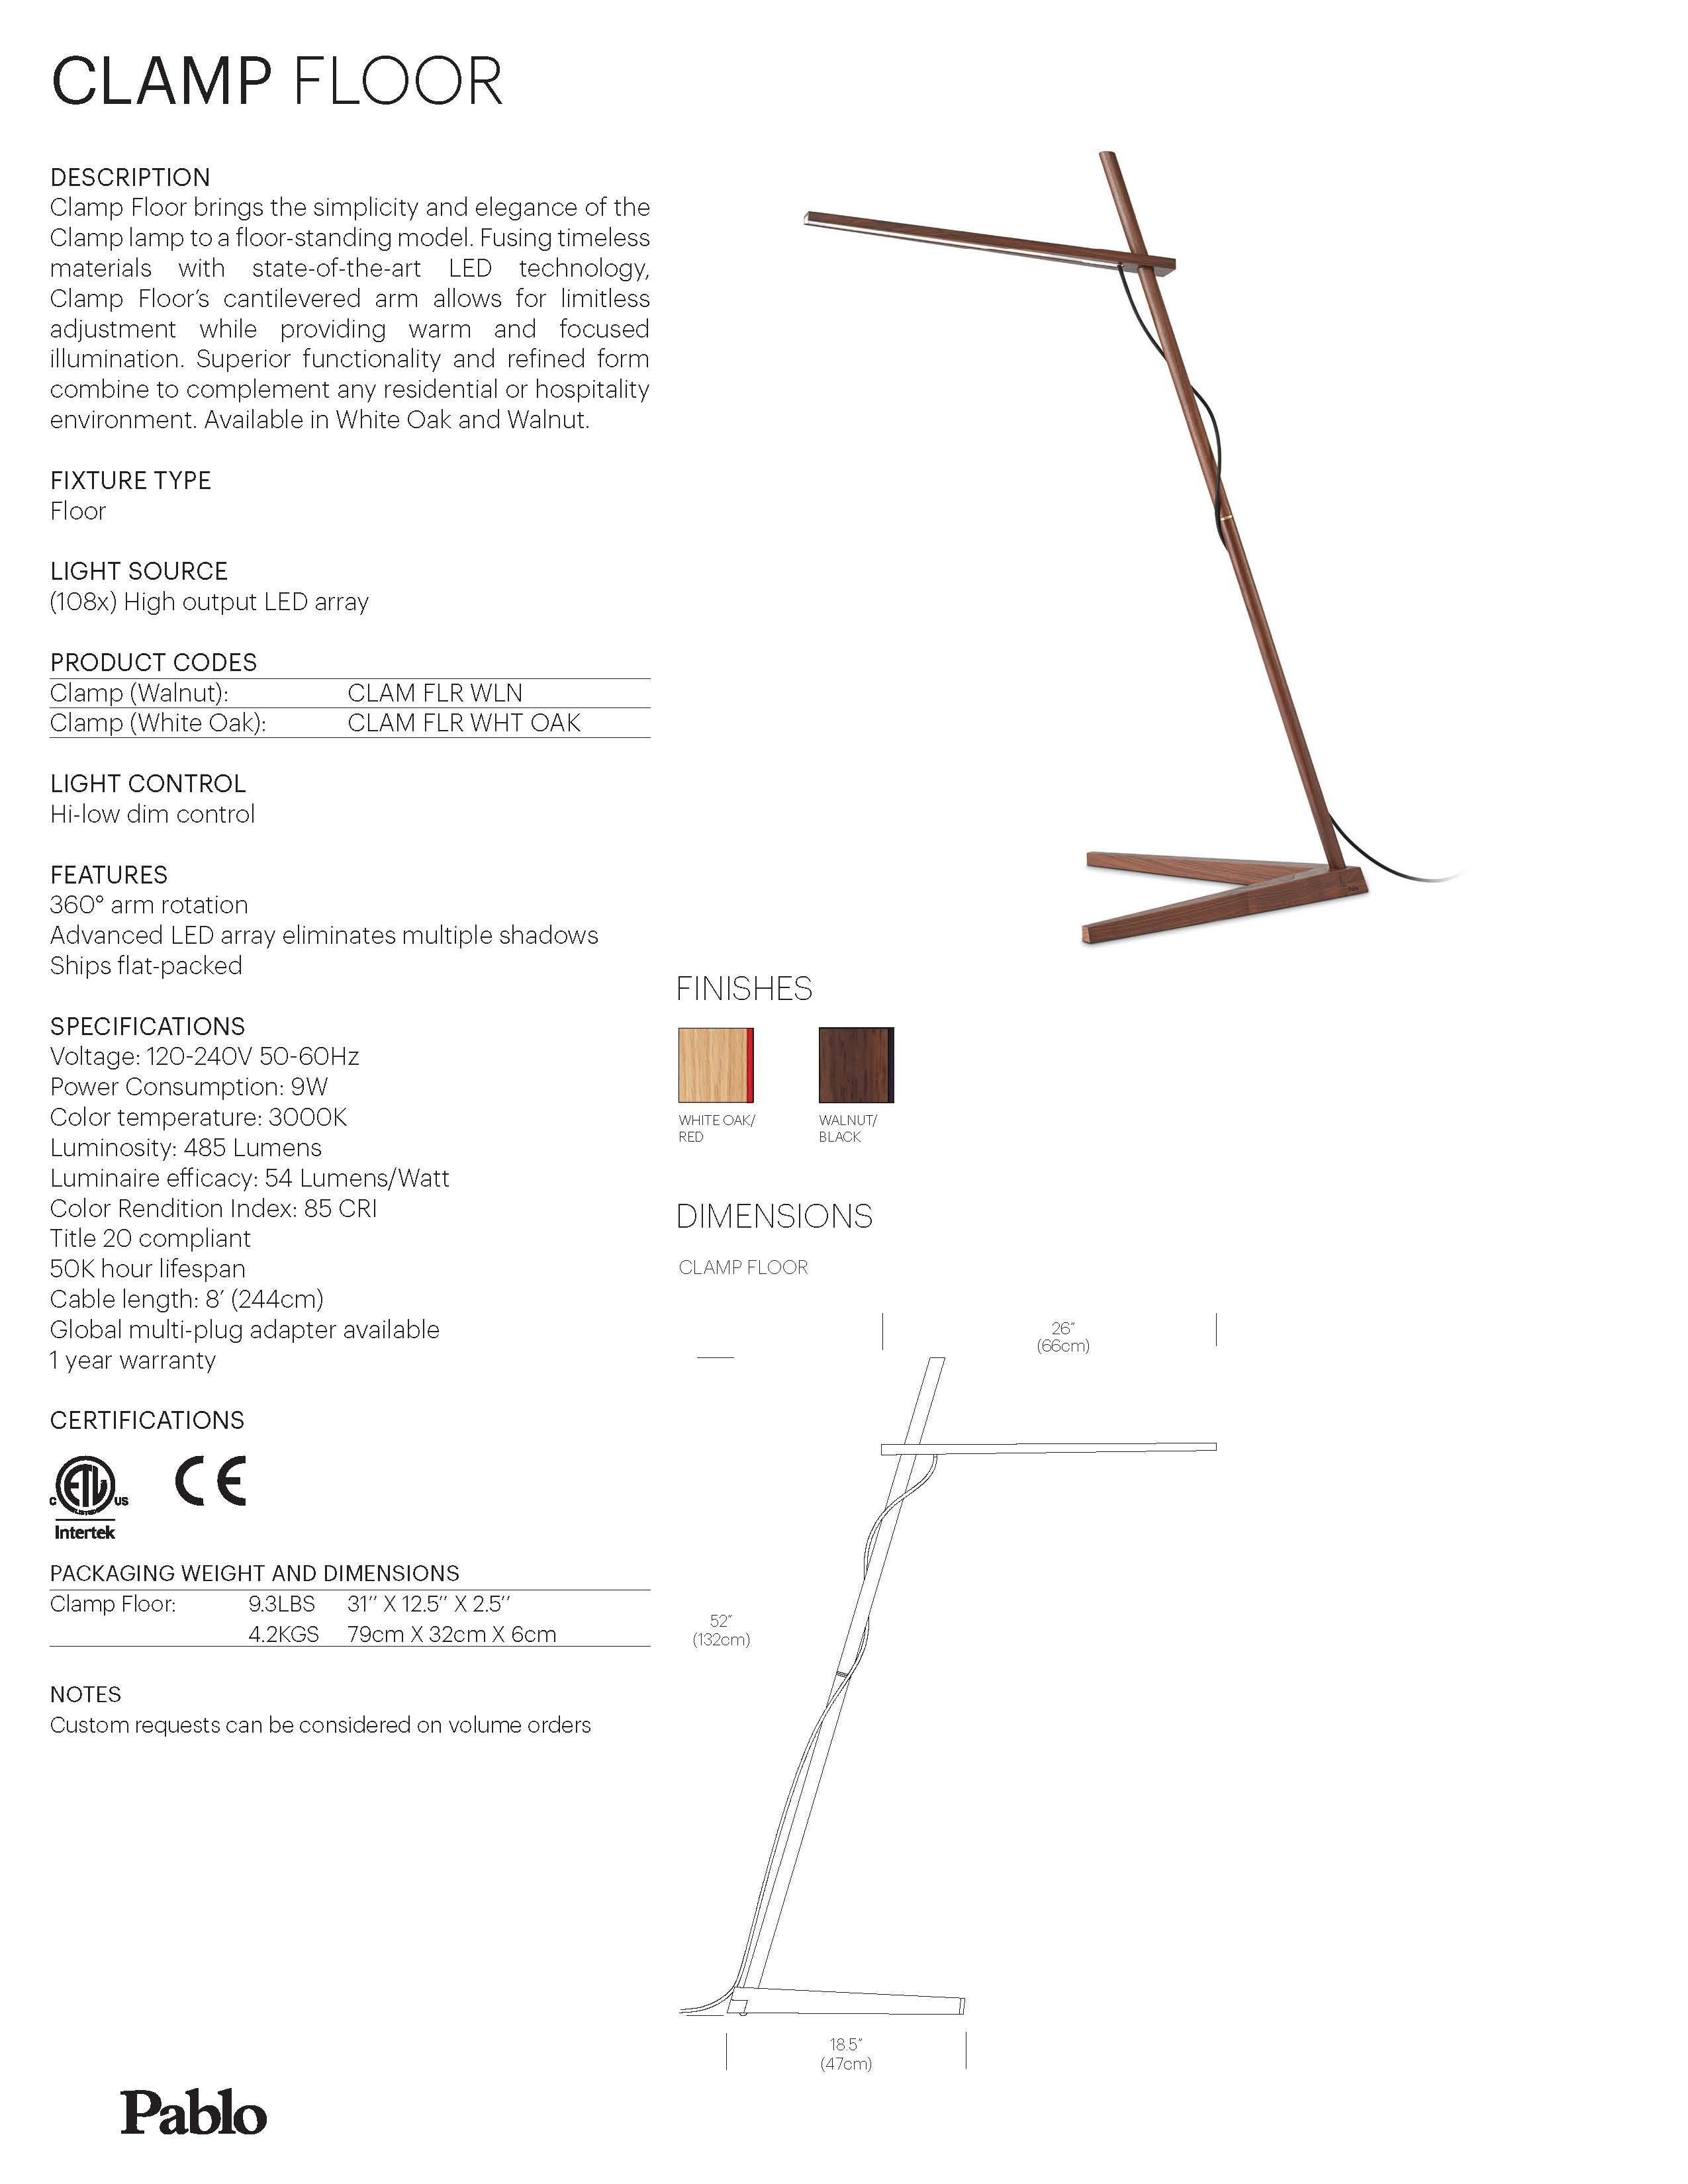 Clamp Floor Lamp in White Oak by Pablo Designs (amerikanisch)